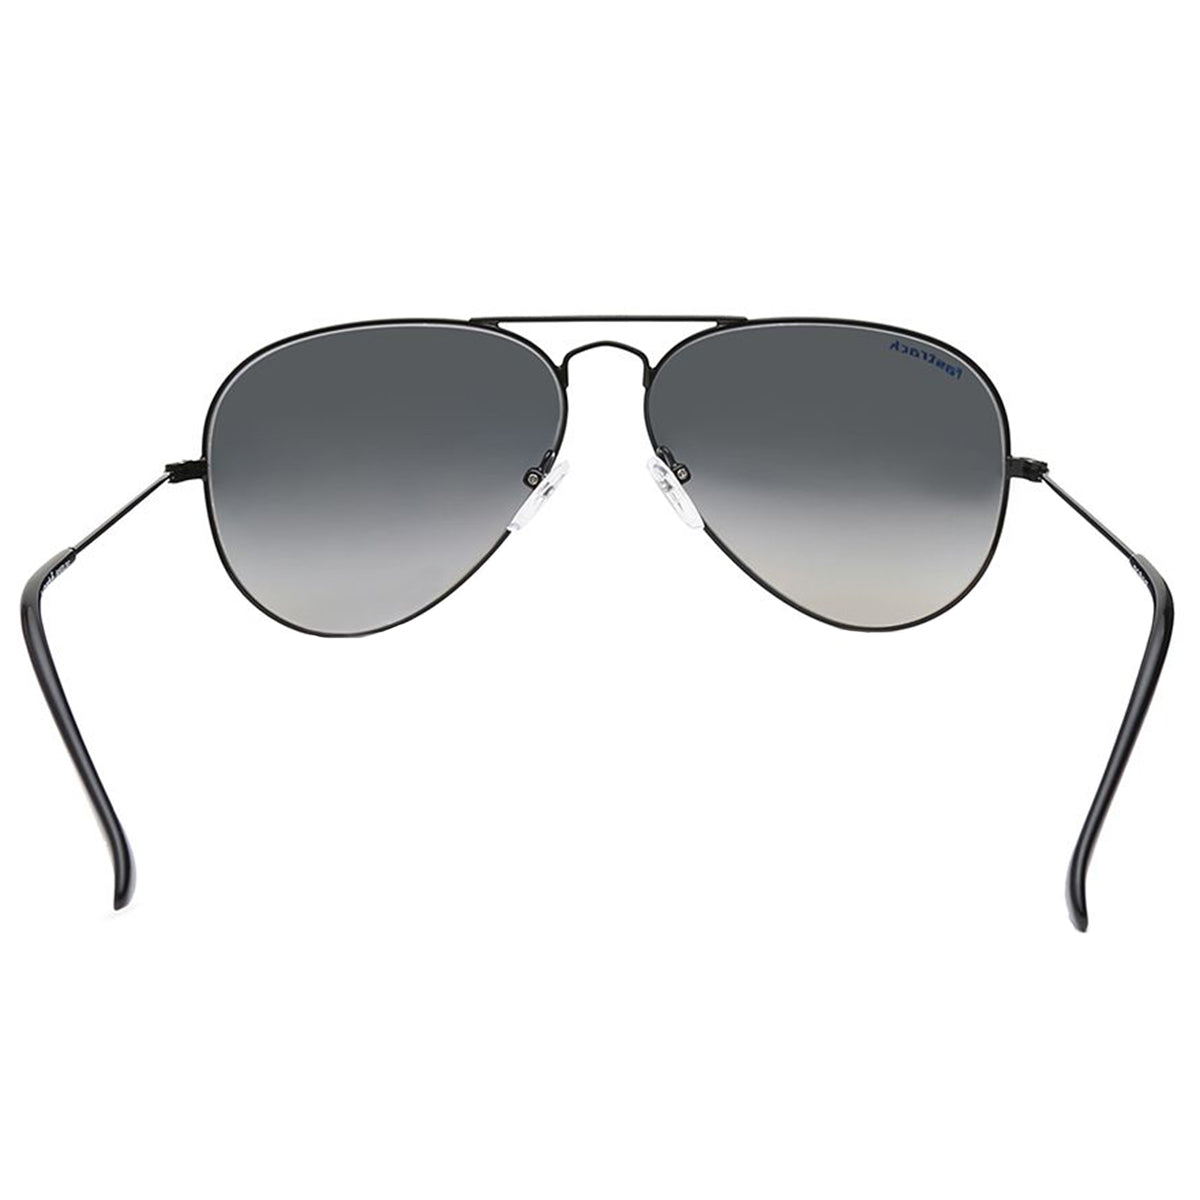 Serengeti Boron Sunglasses -Models: 525001, 525002, 525003, 525004 - Flight  Sunglasses